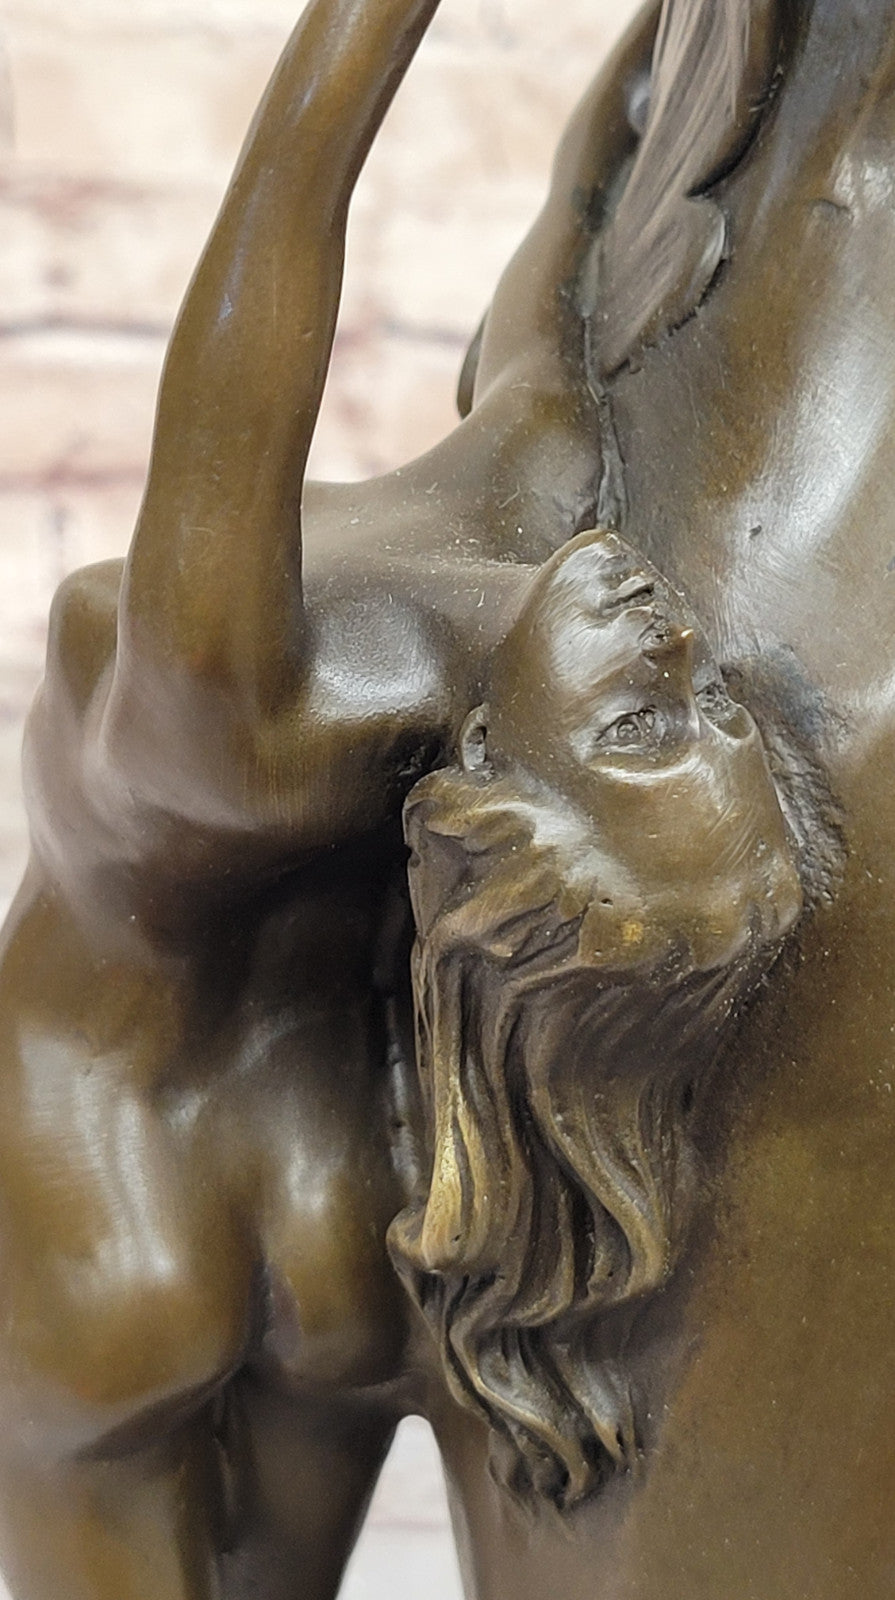 Artisan Craftsmanship: Nude Girl with Flower Vase - Charles Louchet`s Bronze Sculpture